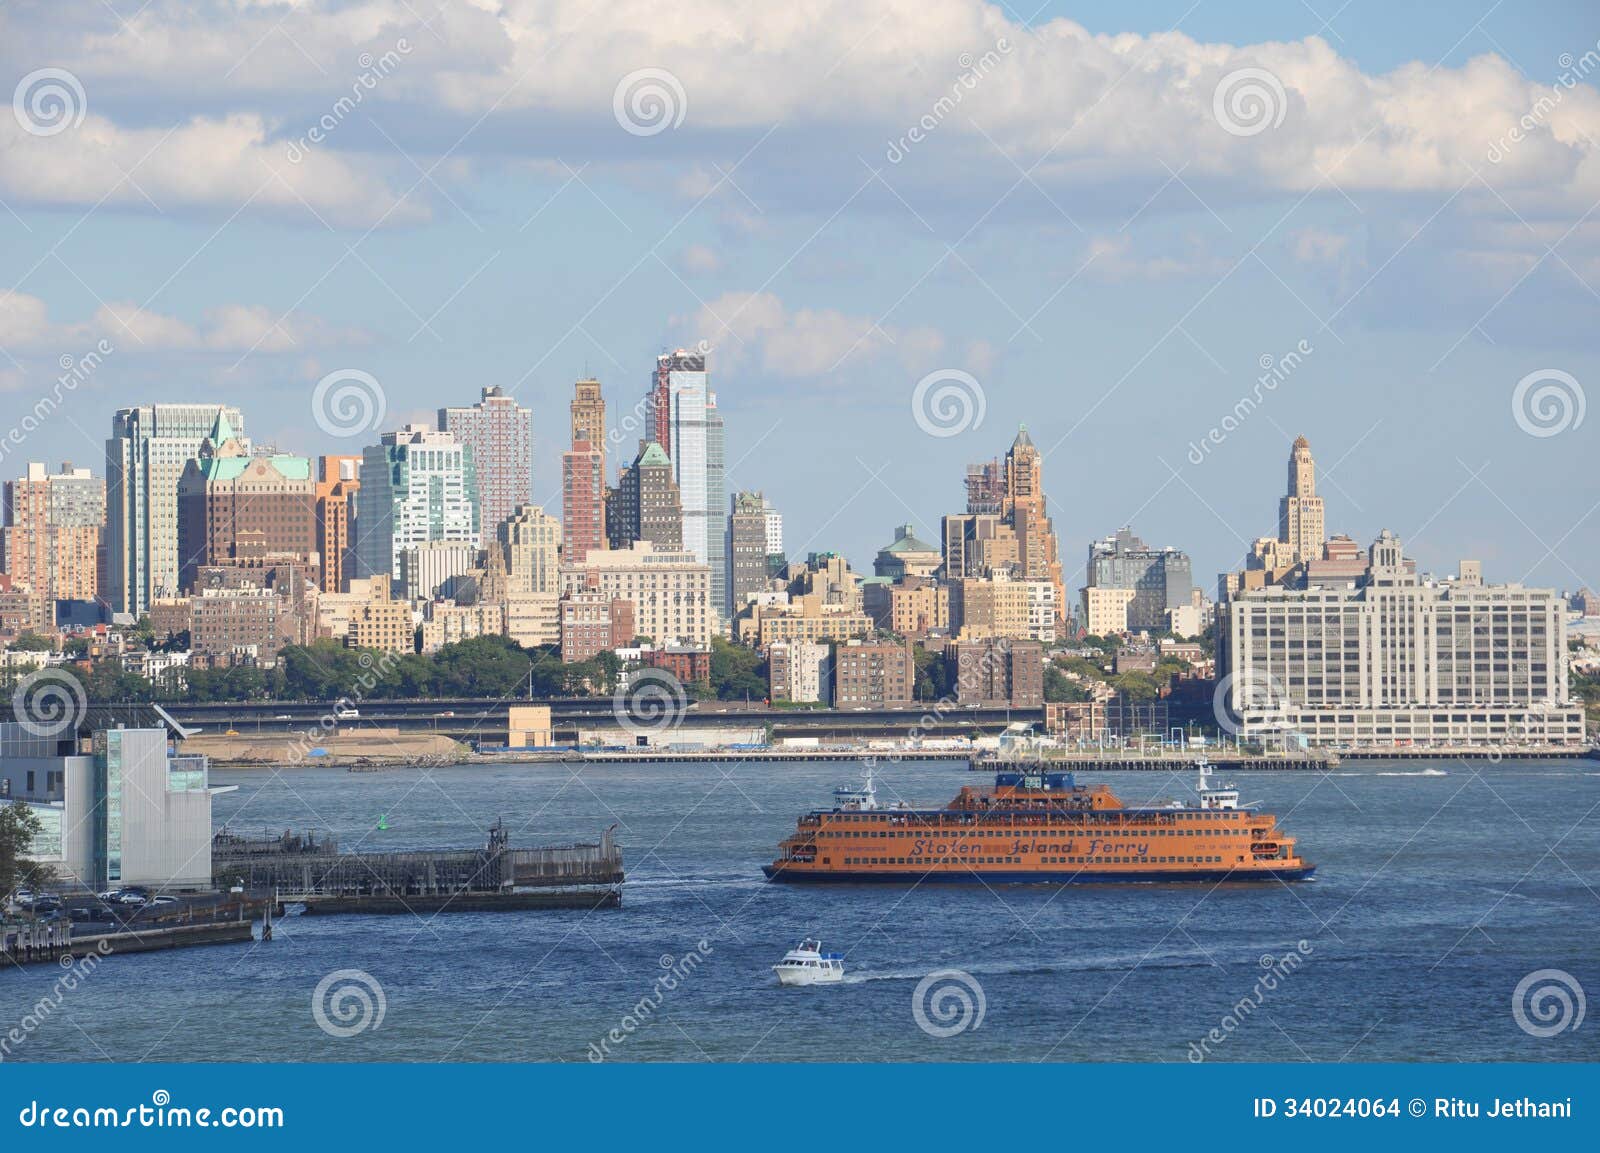 Staten Island Ferry redactionele stock afbeelding. Image of boot - 34024064